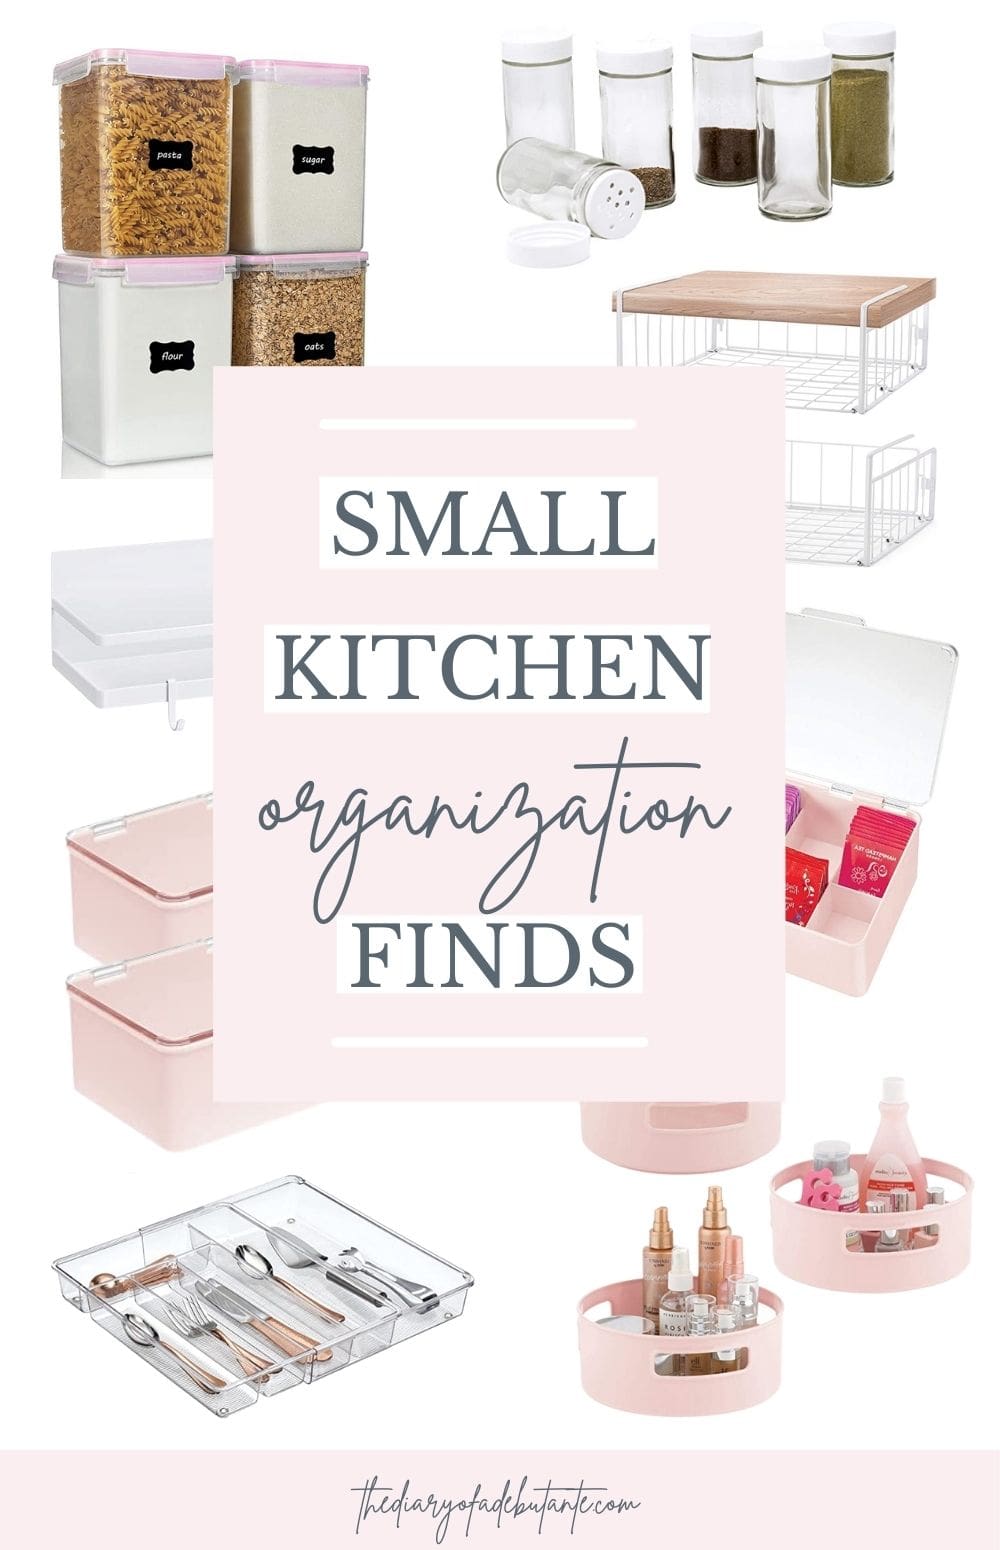 Small kitchen organization ideas from blogger Stephanie Ziajka on Diary of a Debutante